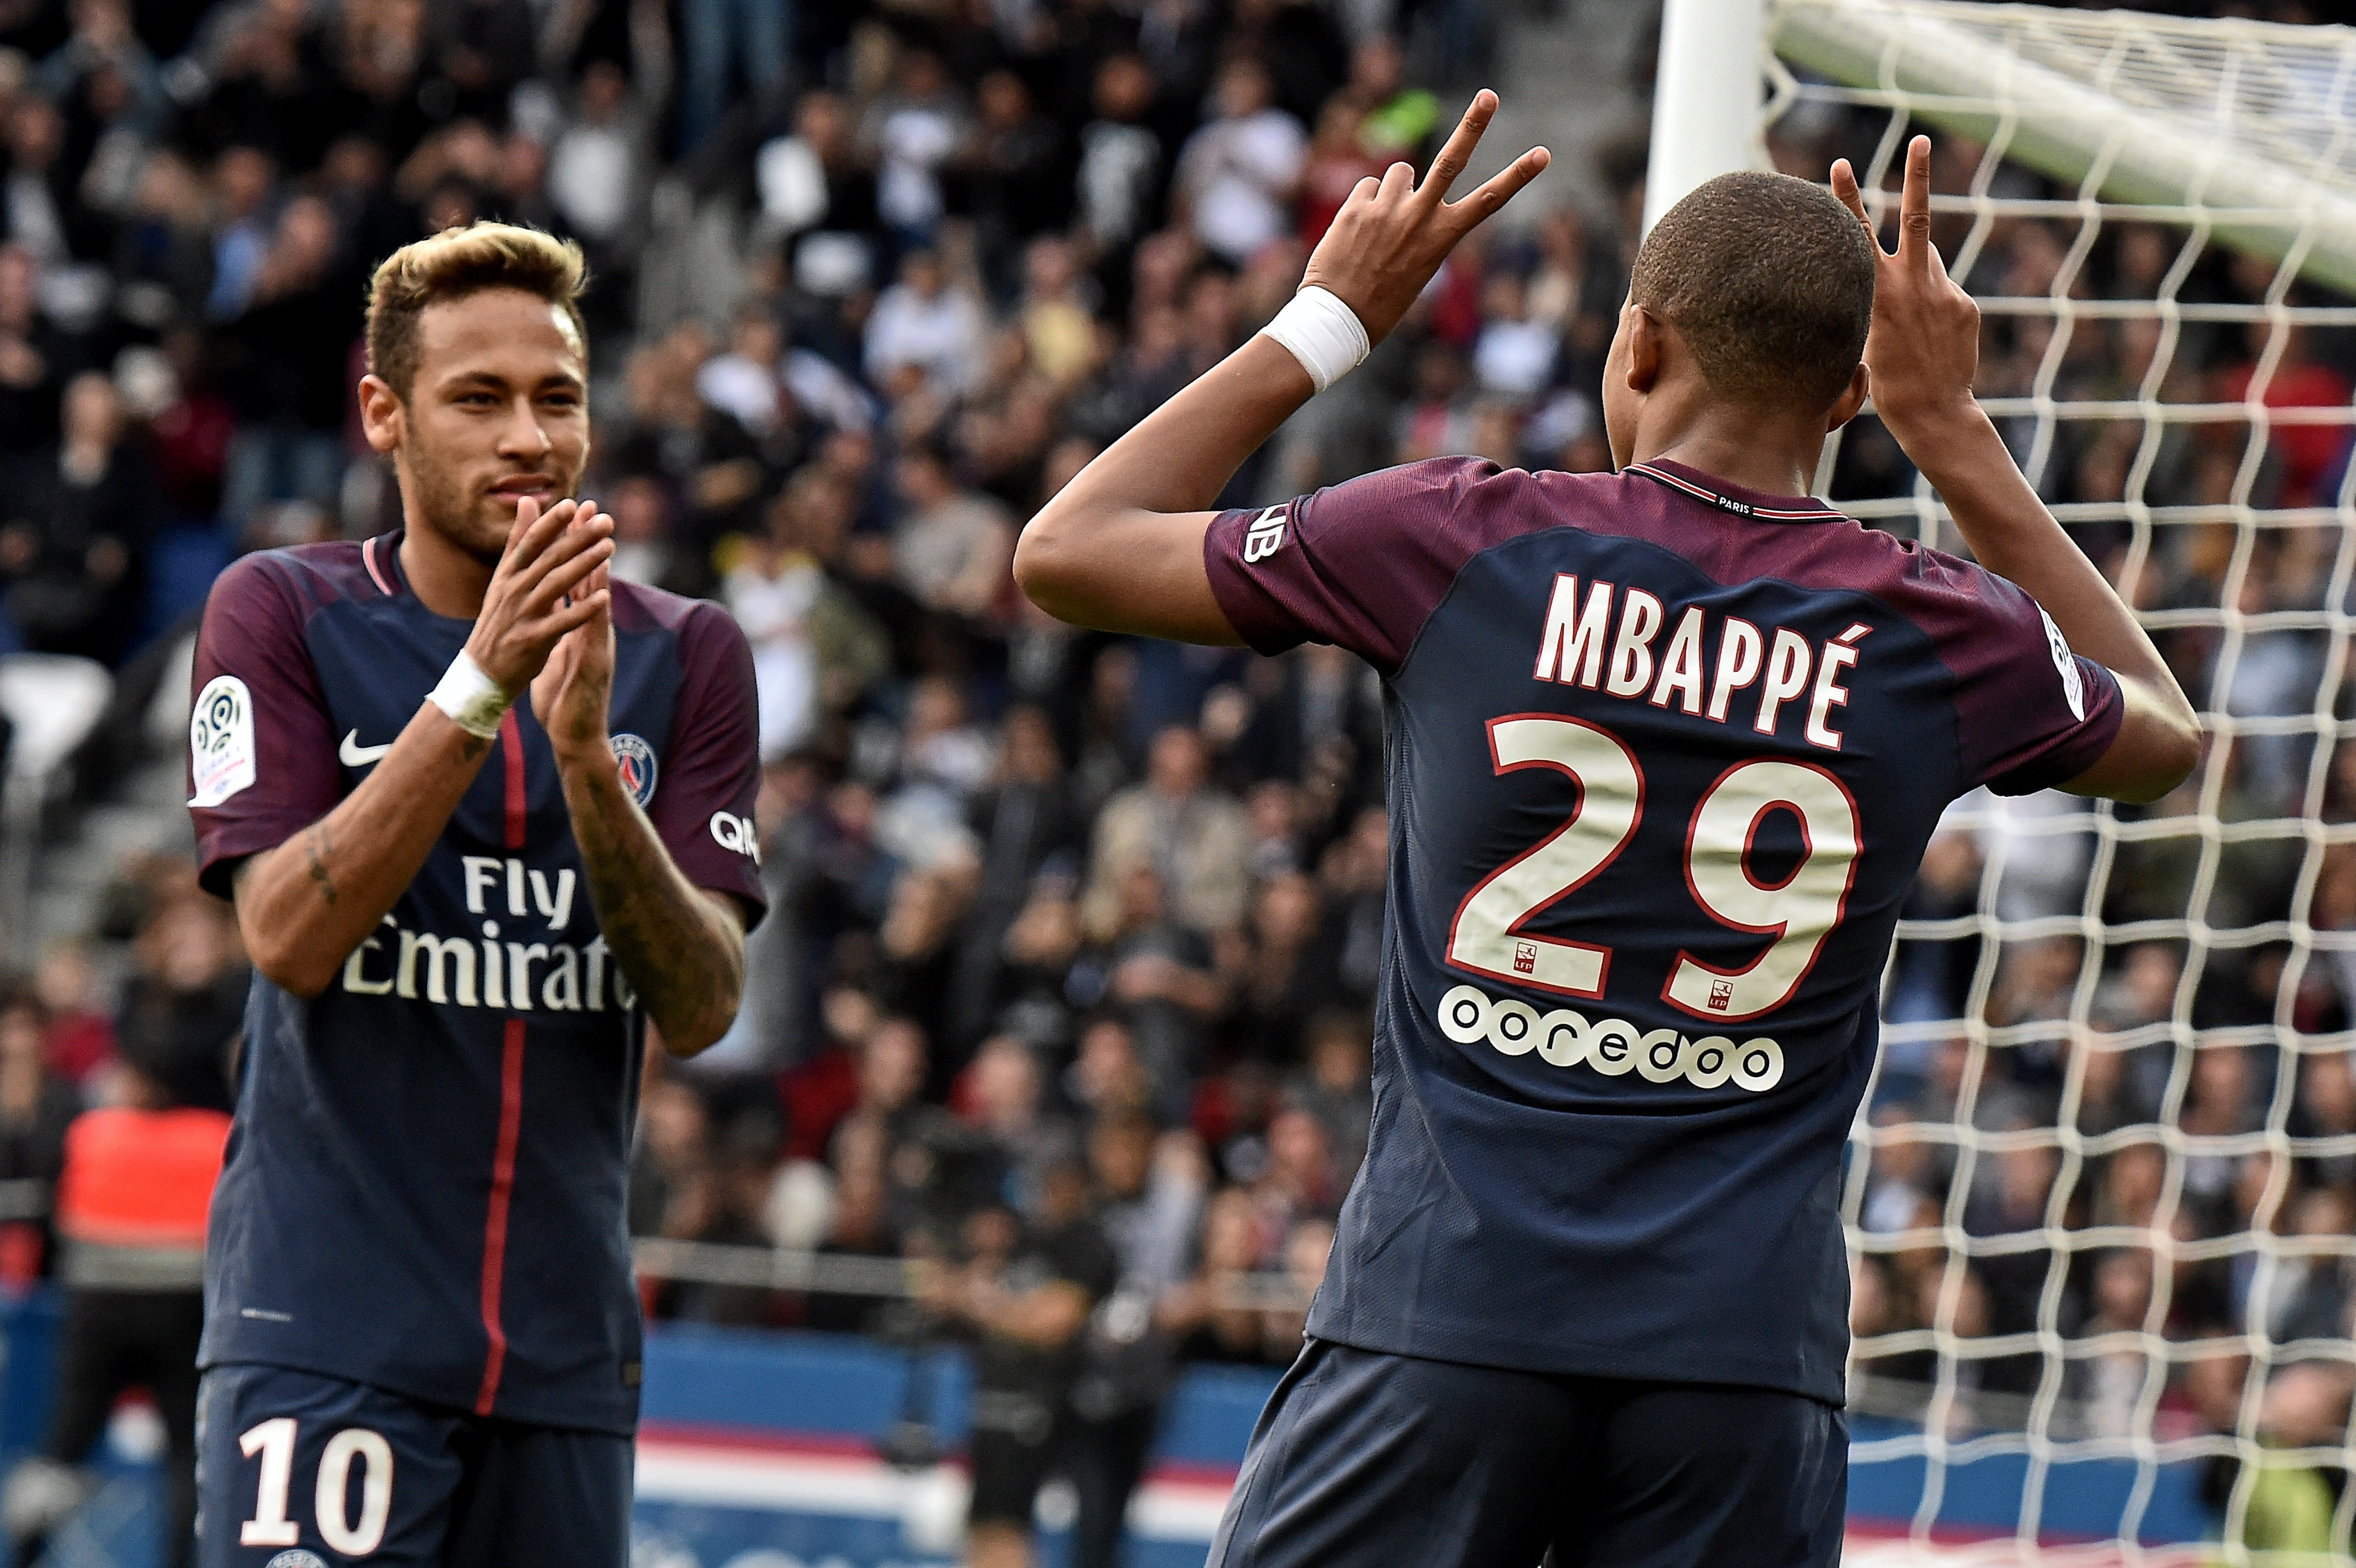 Confiança al Madrid: Neymar i Mbappé, al mercat